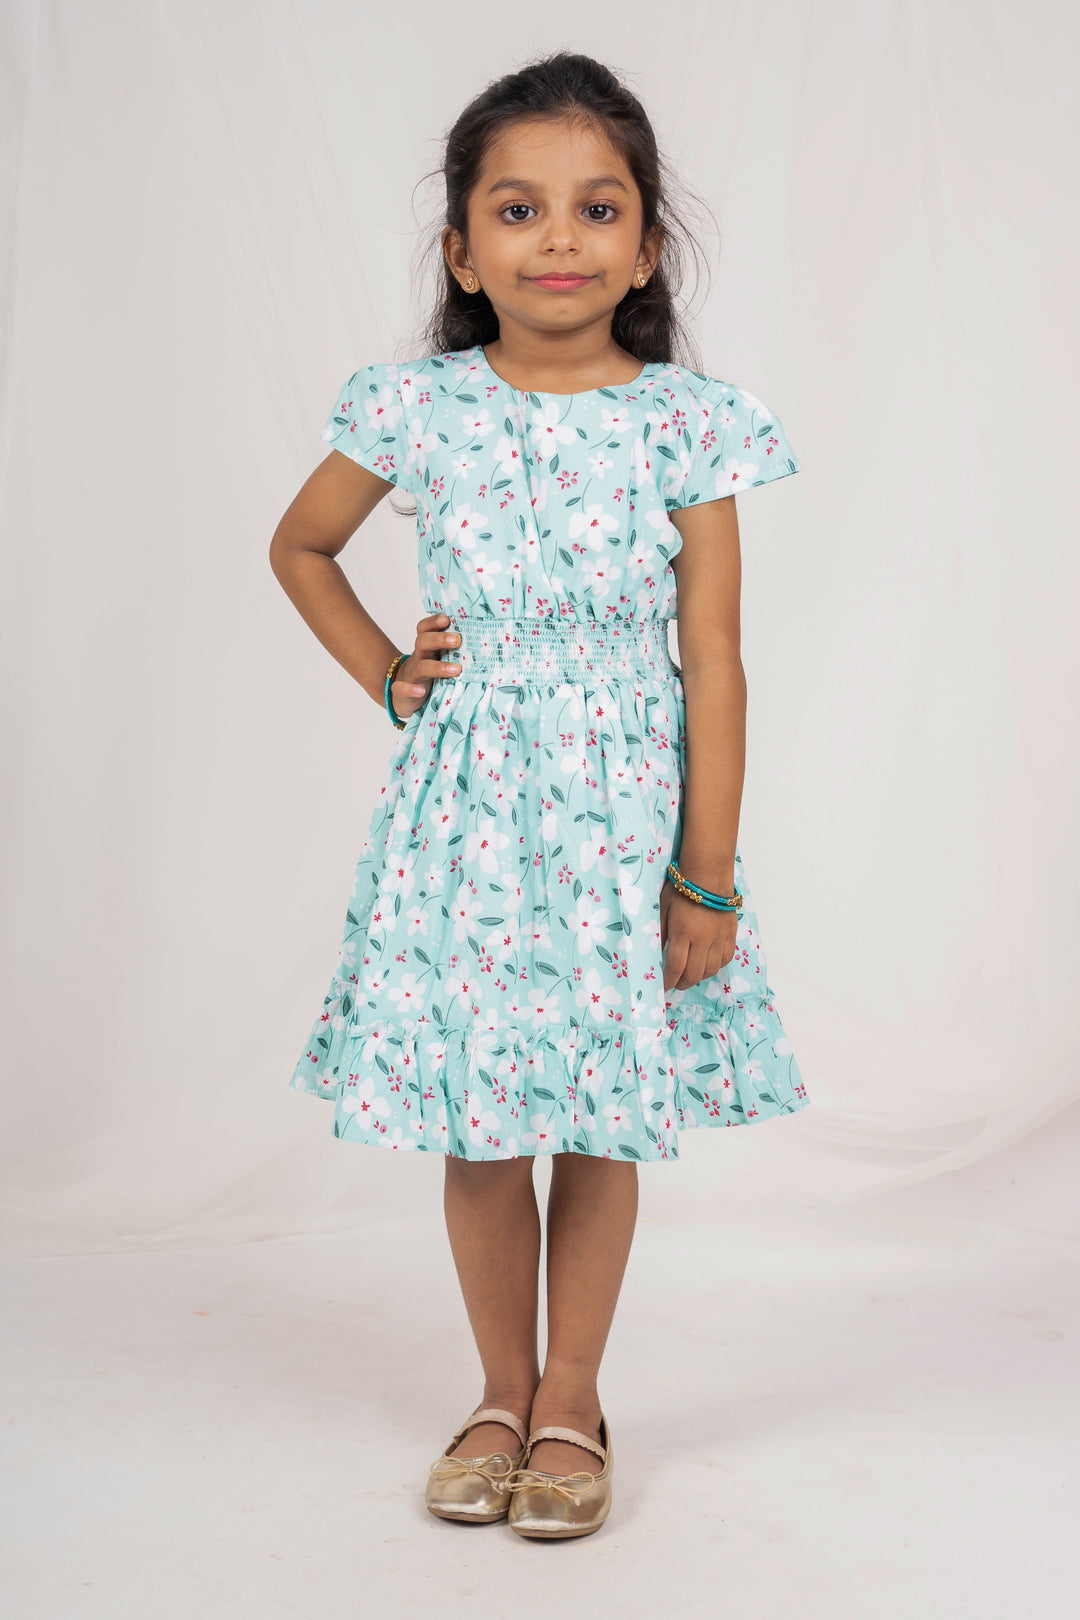 The Nesavu Frocks & Dresses New Designer Elastic Waist Soft Cotton Frock For Baby Girls psr silks Nesavu 18 (2Y) / Green GFC828